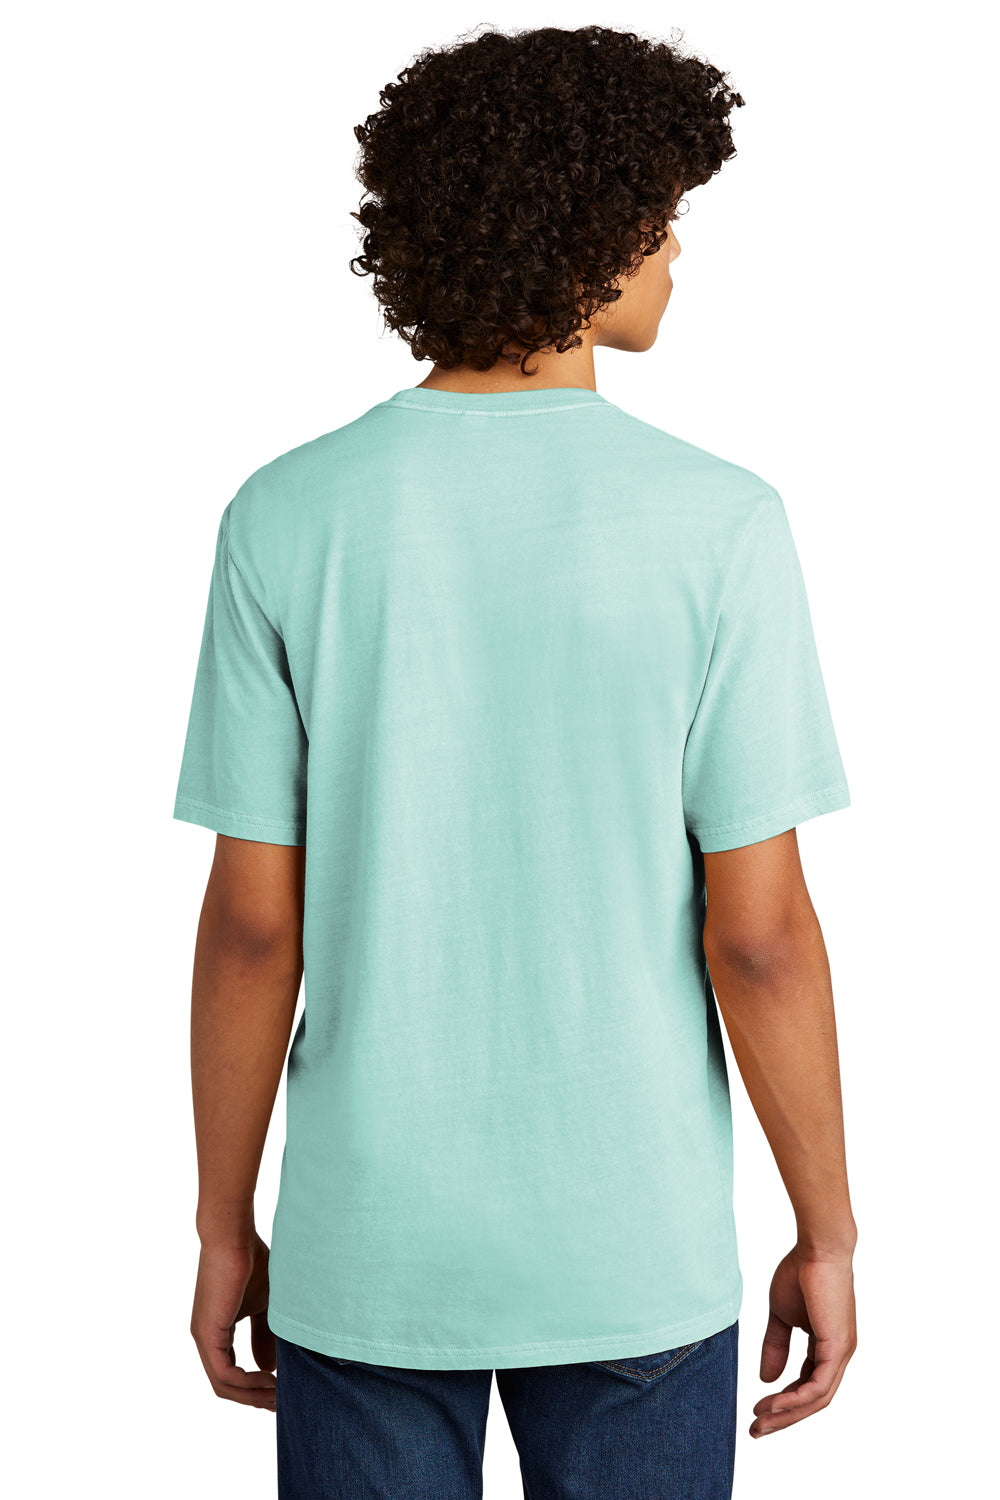 Allmade AL2400 Mens Mineral Dye Short Sleeve Crewneck T-Shirt Saltwater Blue Model Back